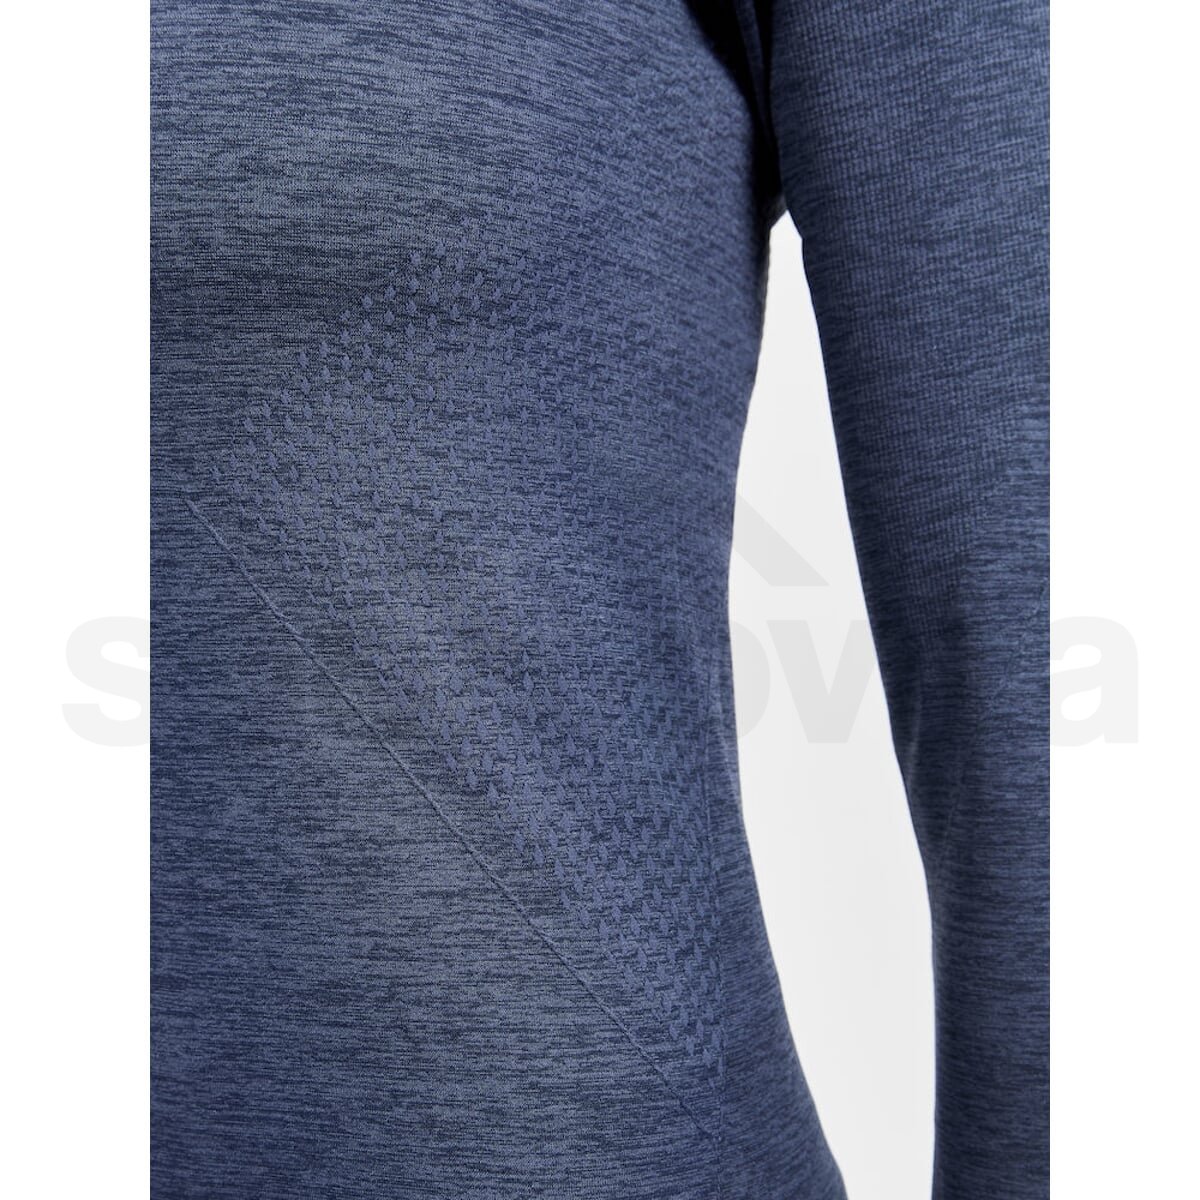 Tričko CRAFT CORE Dry Active Comfort LS W - tmavě modrá